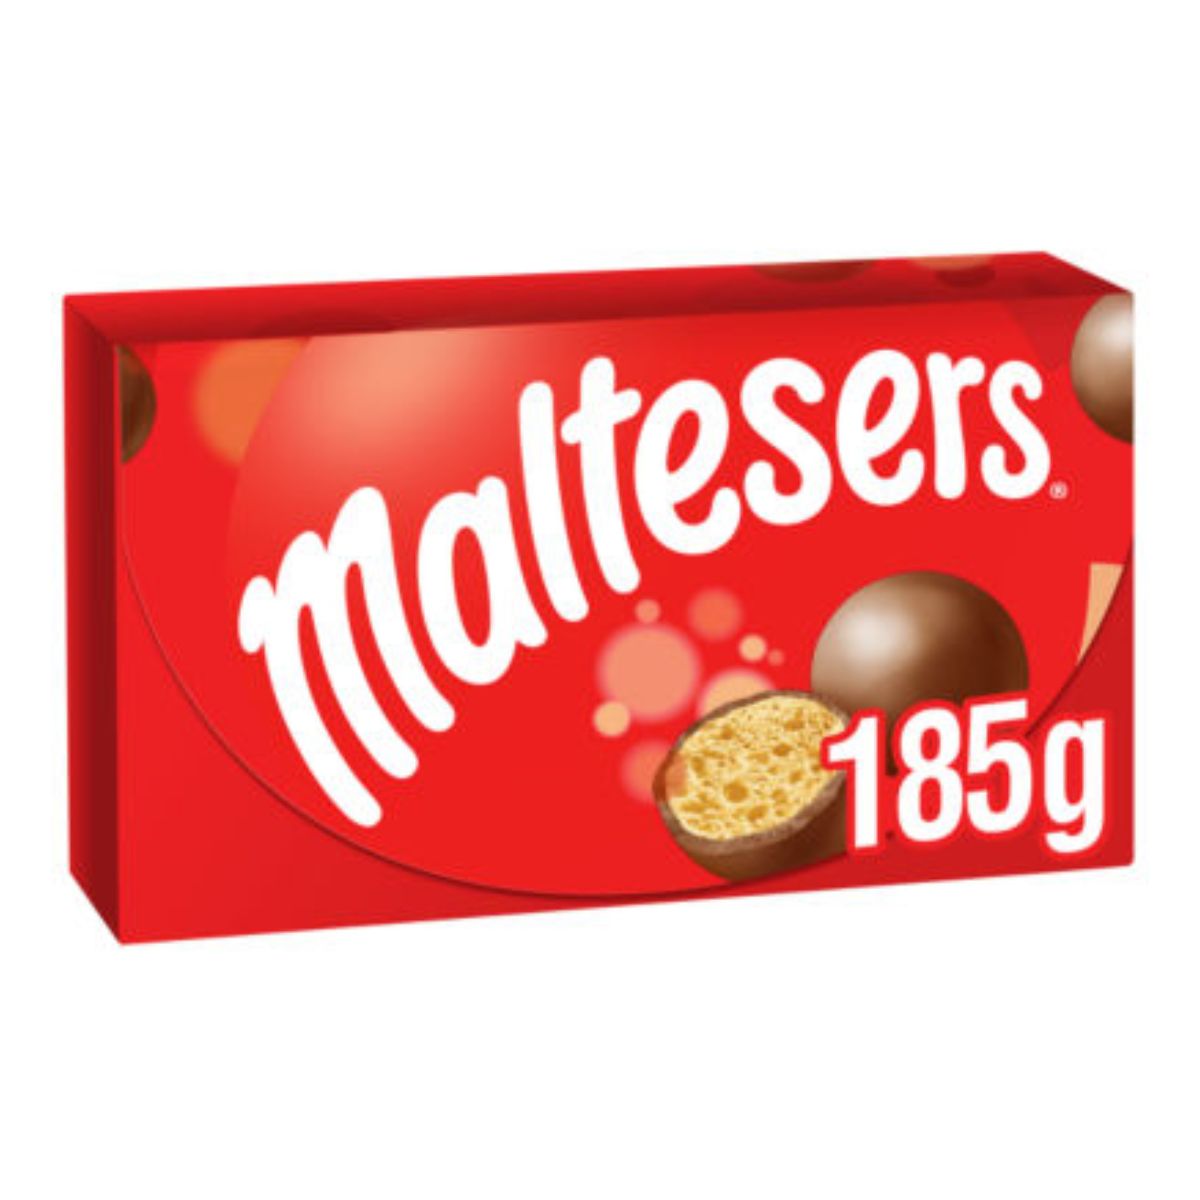 Maltesers - Chocolate Box - 185g maltesers Maltesers - Chocolate Box - 185g maltesers Maltesers - Chocolate Box - 185g maltesers Maltesers - Chocolate Box - 185g maltesers Maltesers - Chocolate Box - 185g maltesers Maltesers - Chocolate Box -
185g maltestesrs Maltestesrs